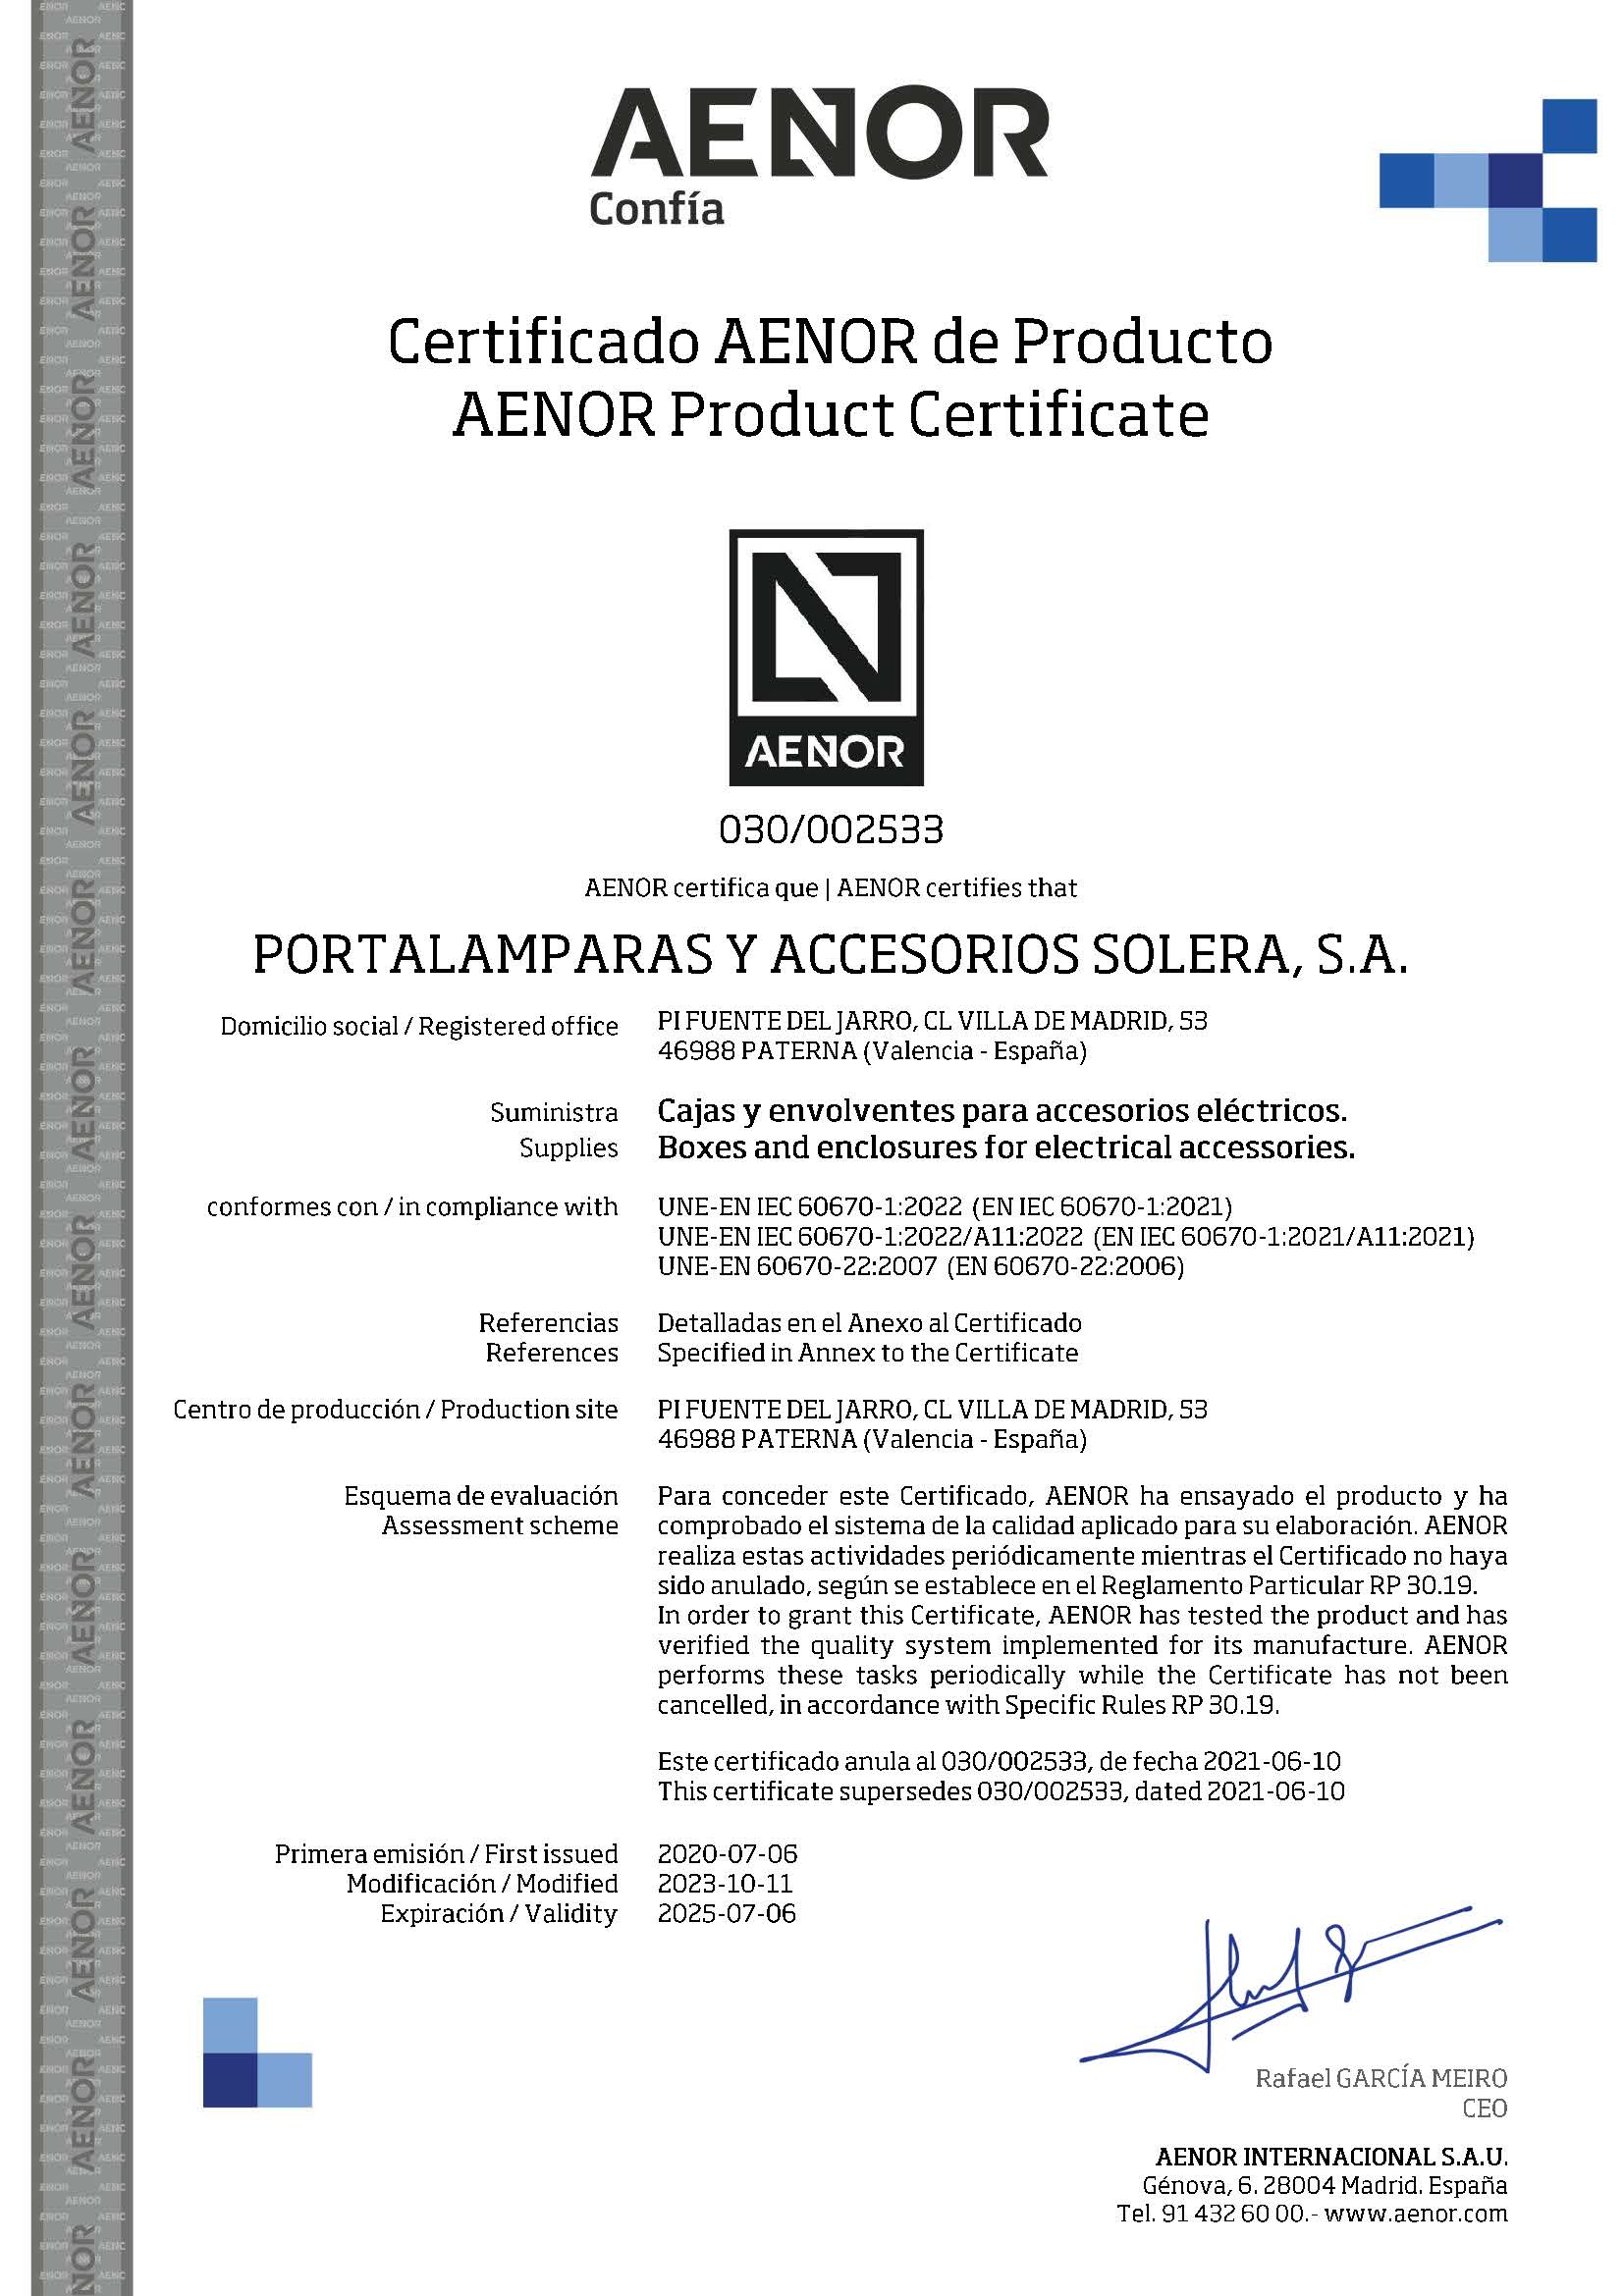 Certificado de produto AENOR Ybox 